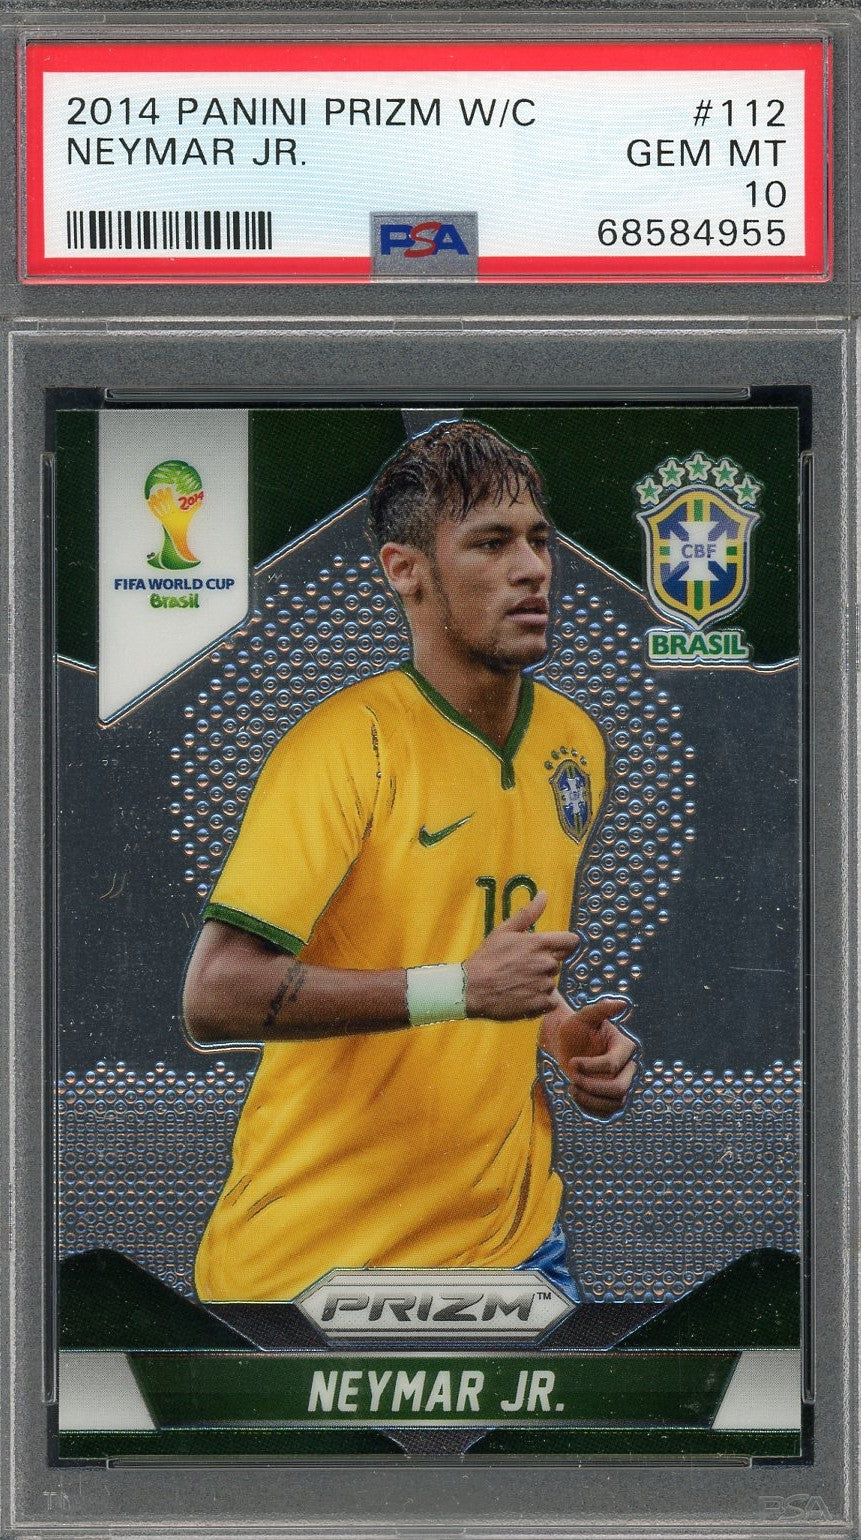 Neymar Jr 2014 Panini Prizm World Cup Soccer Card #112 Graded PSA 10